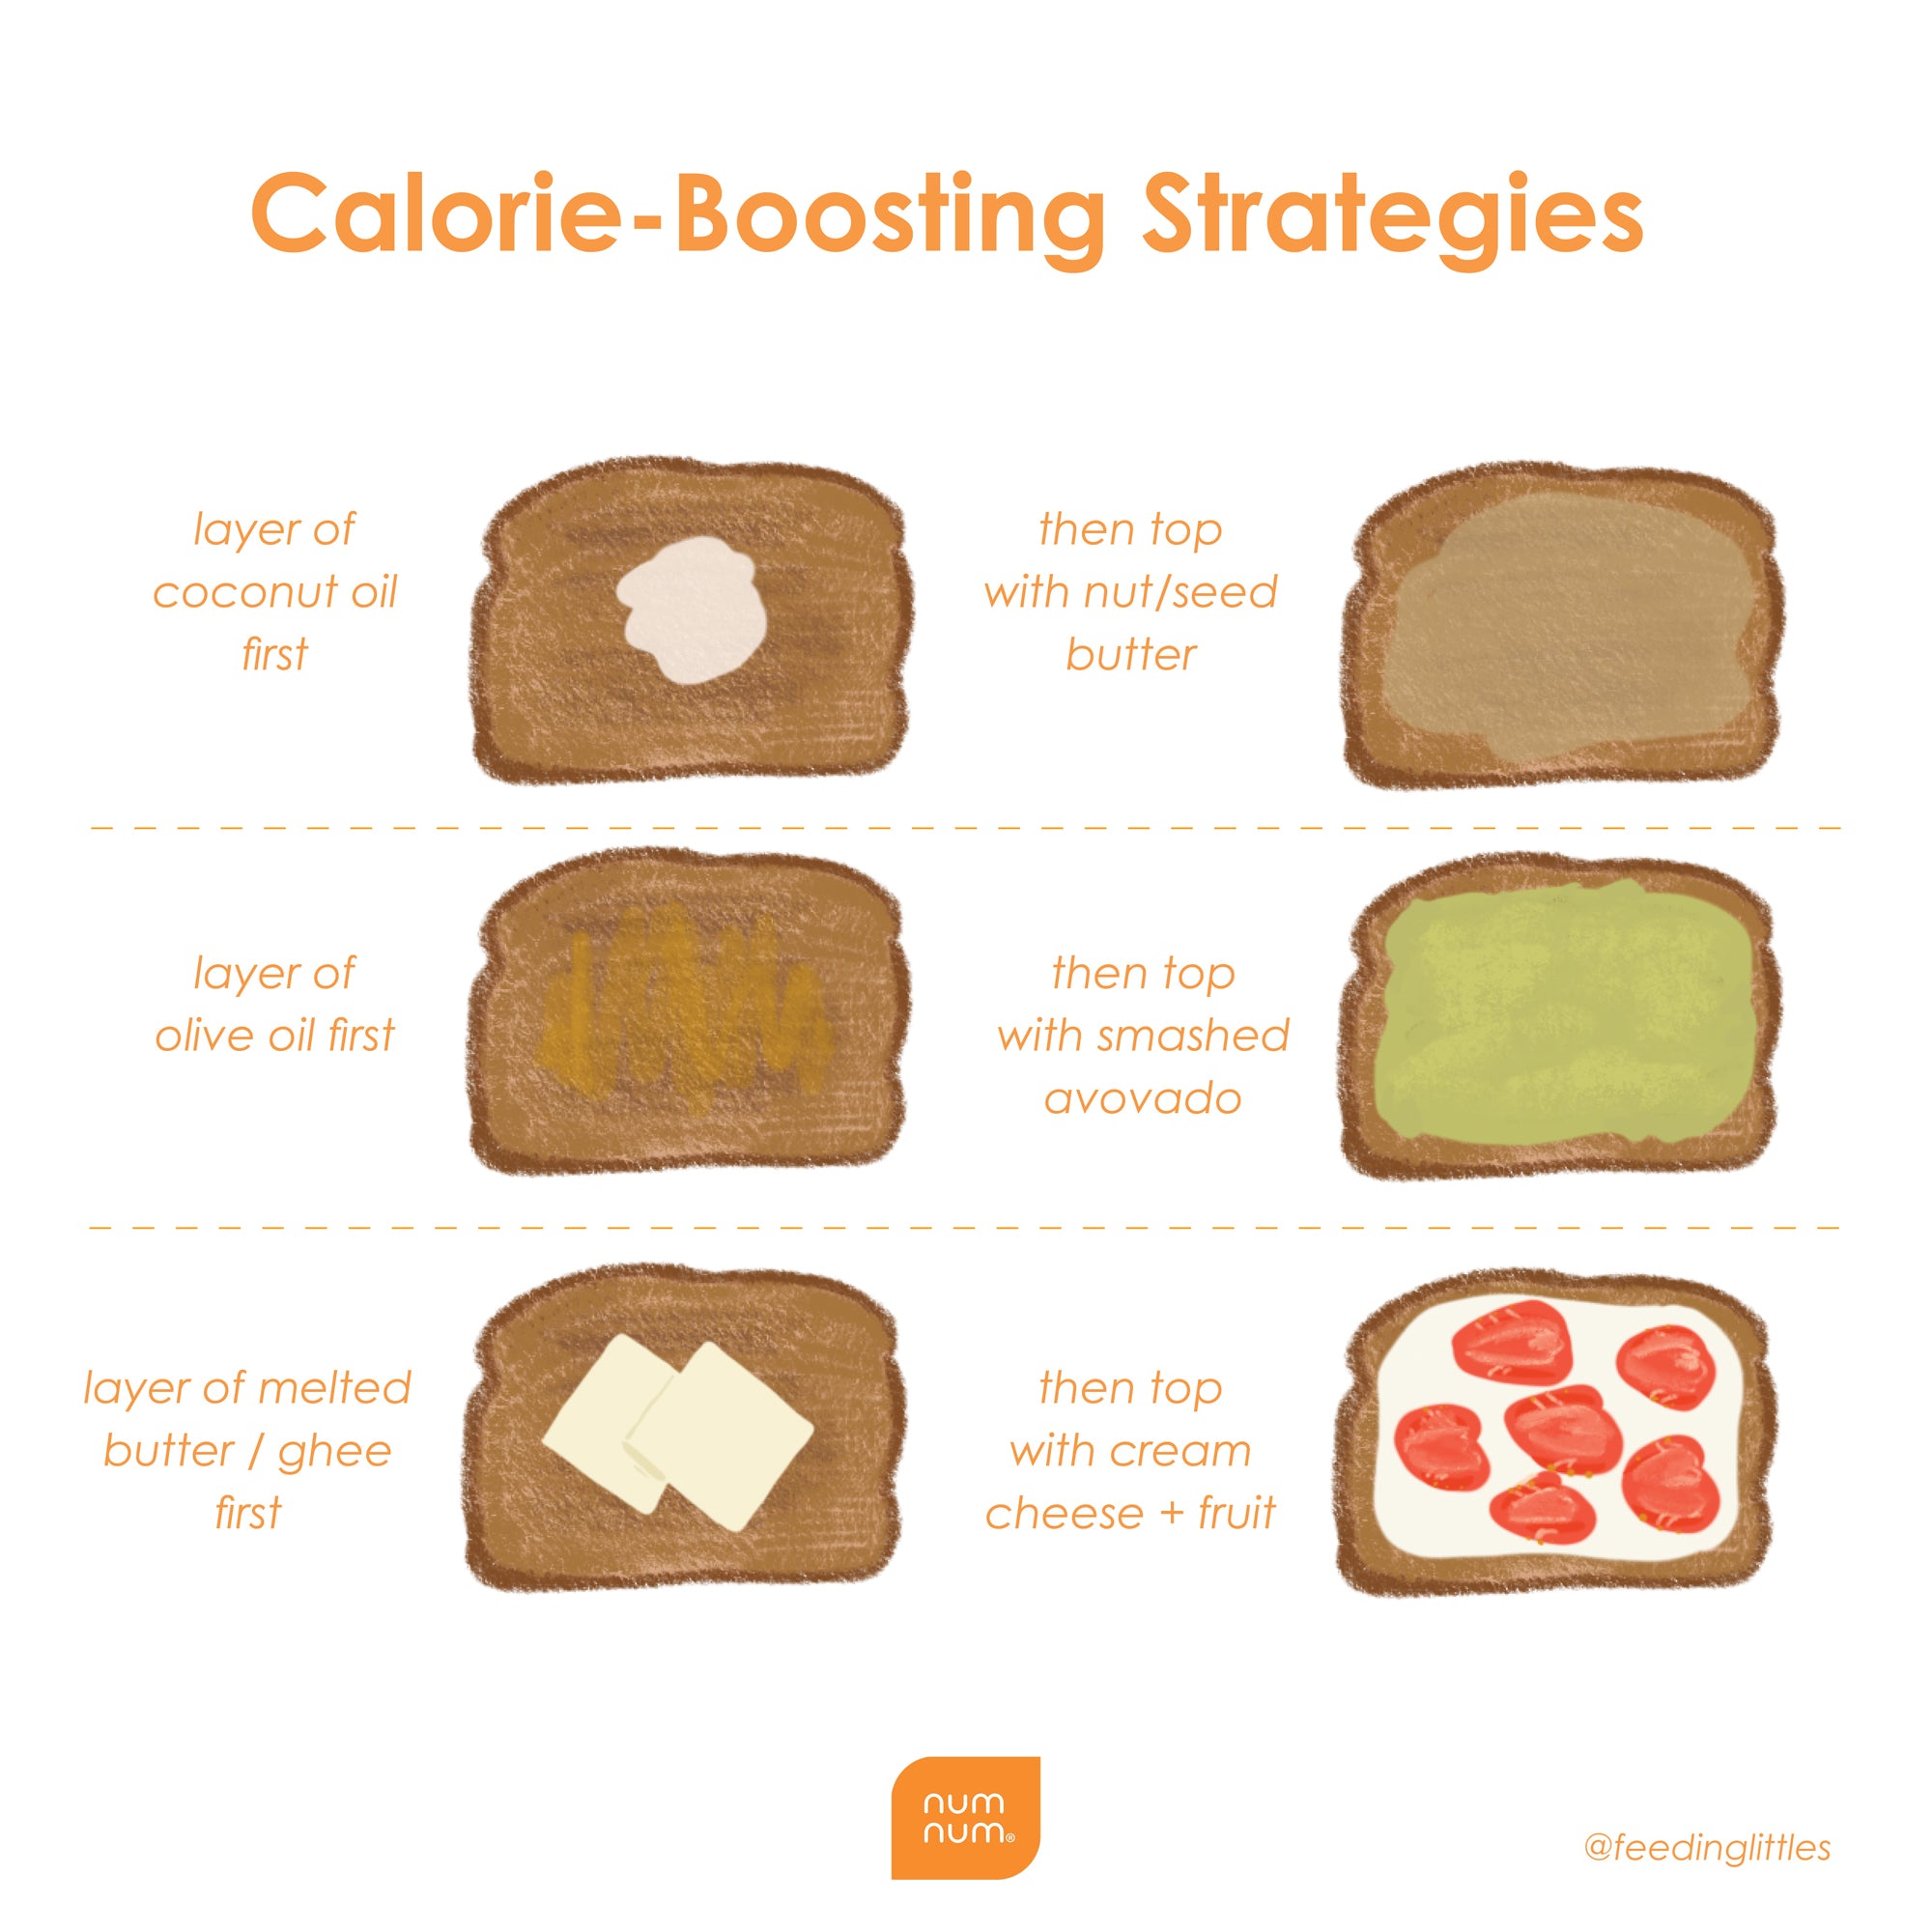 Calorie-Boosting Strategies